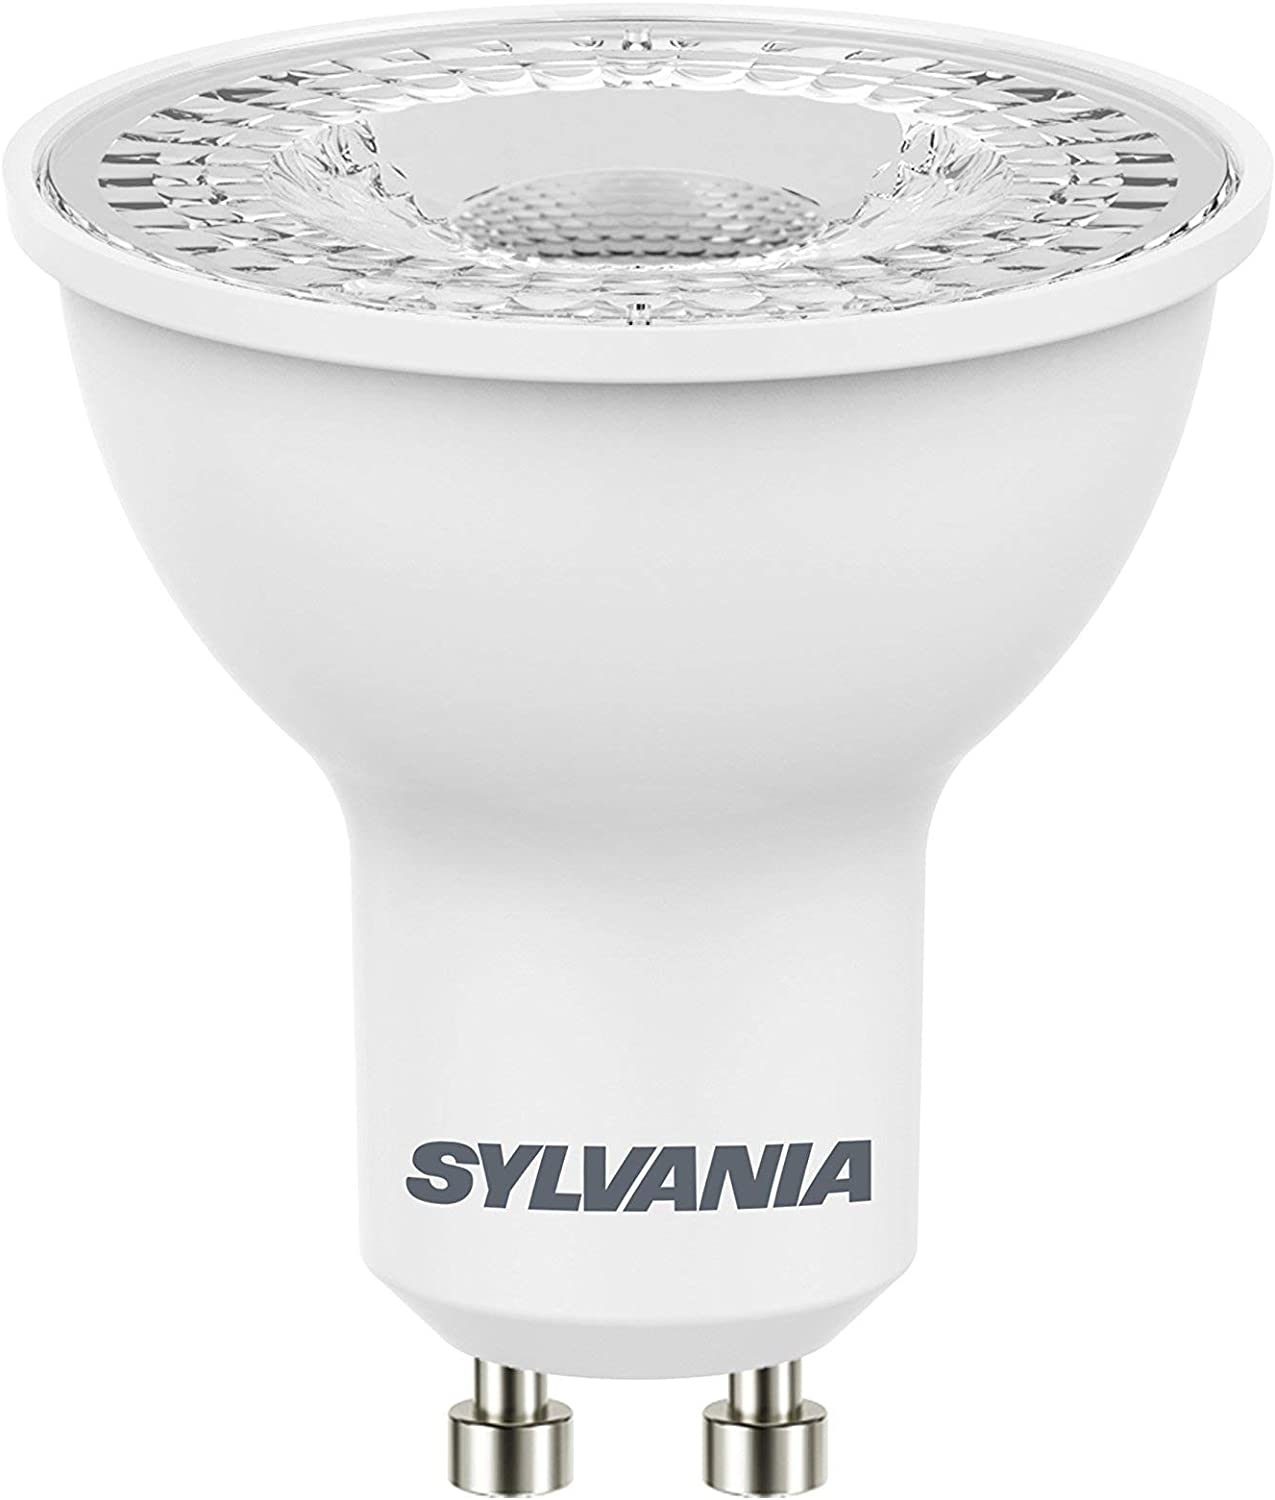 Sylvania Refled ES50 V4 GU10 LED Bombilla Regulable Lámparas 5W GU10 36 grados